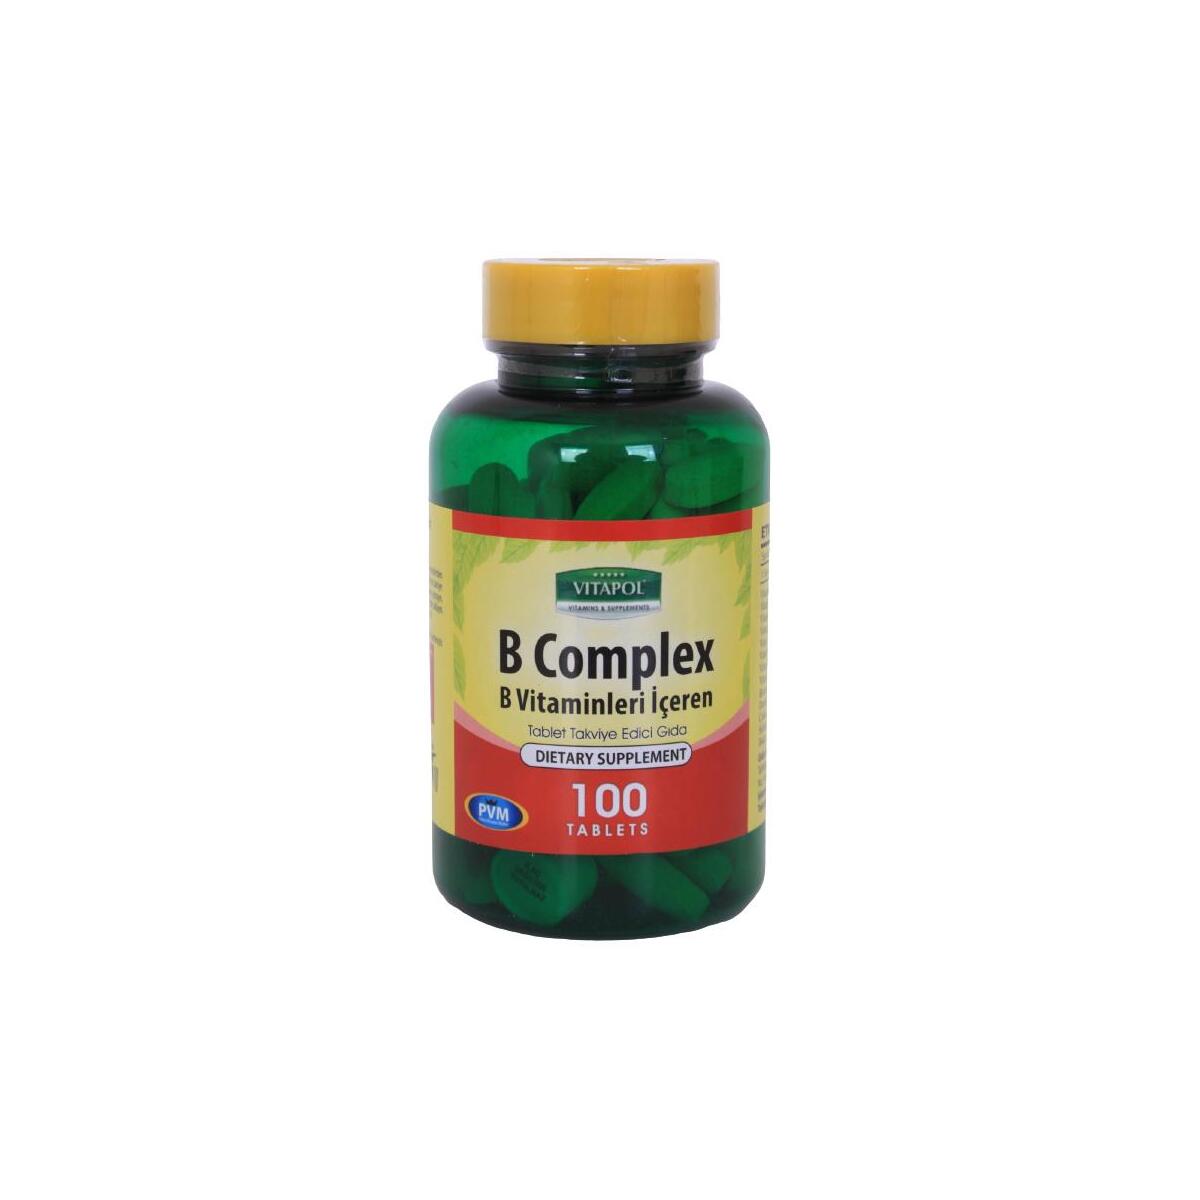 Vitapol B Vitamini Kompleks 100 Tablet Vitamin B Complex